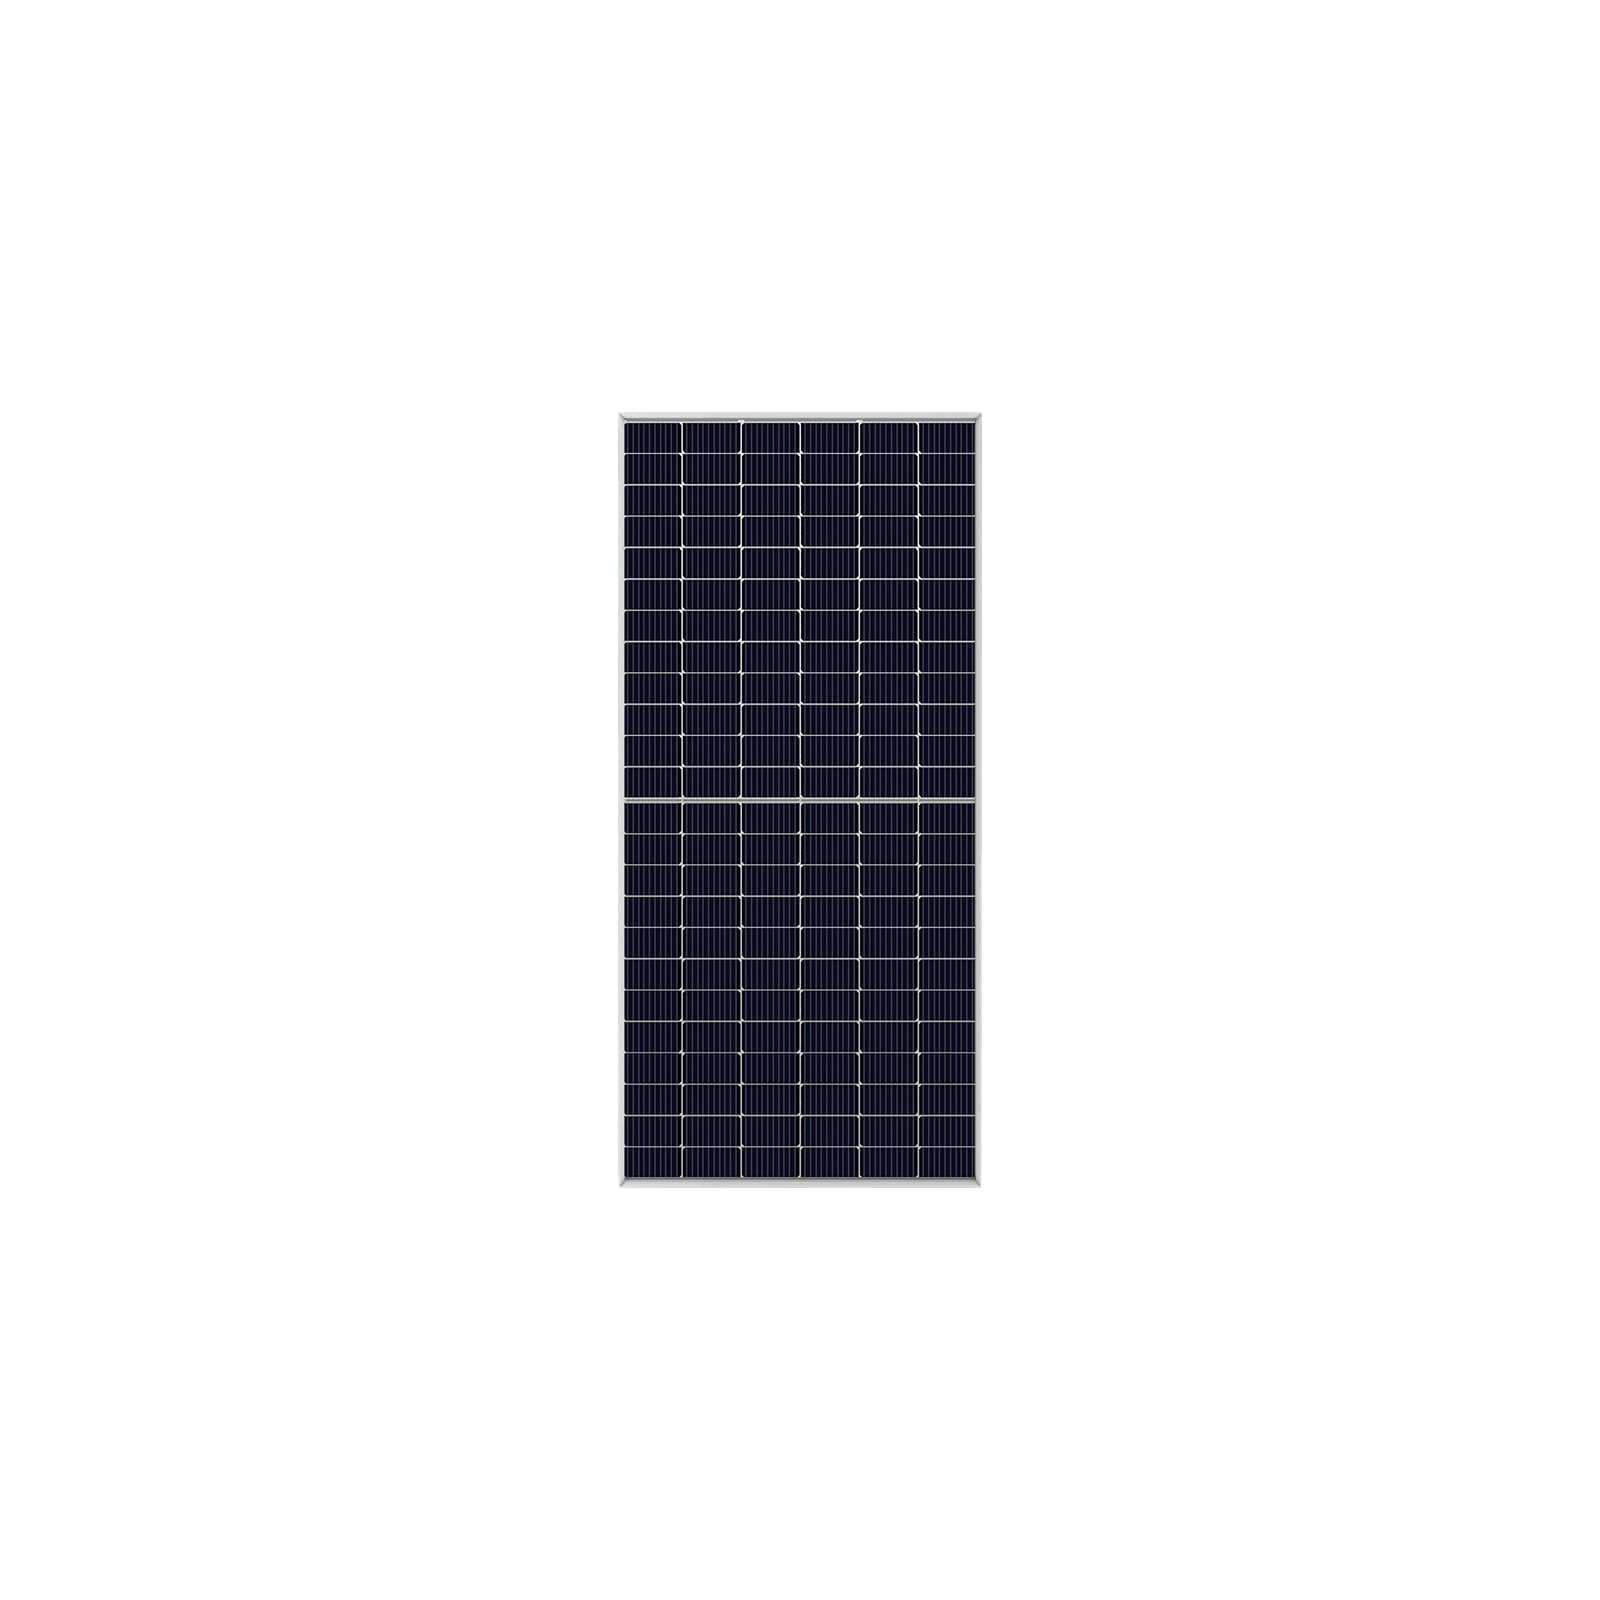 Солнечная панель PNG Solar 500W with 182mm half-cell monocrystalline (PNGMH66-B8-500)